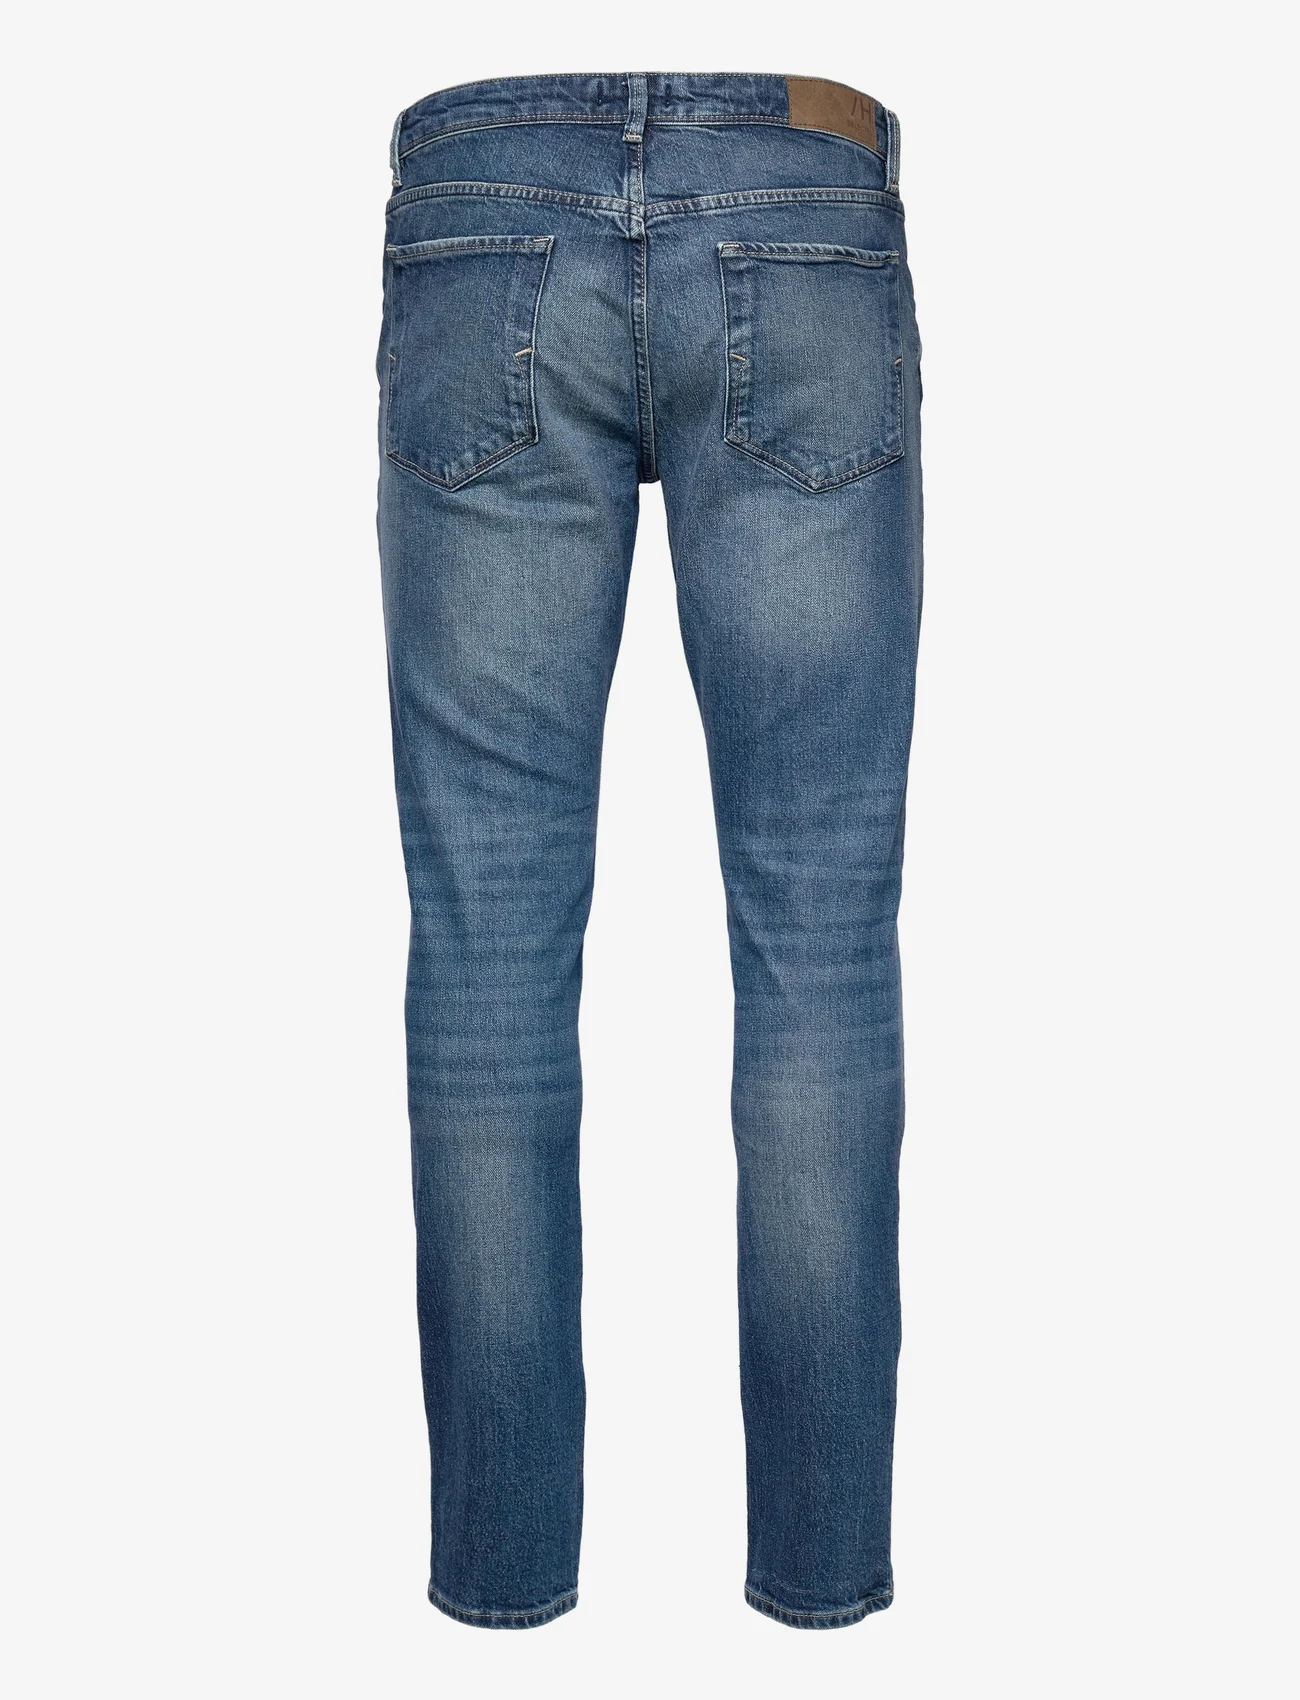 Selected Homme - SLHSLIM-LEON 24603 MB TENCEL JNS W - slim jeans - medium blue denim - 1